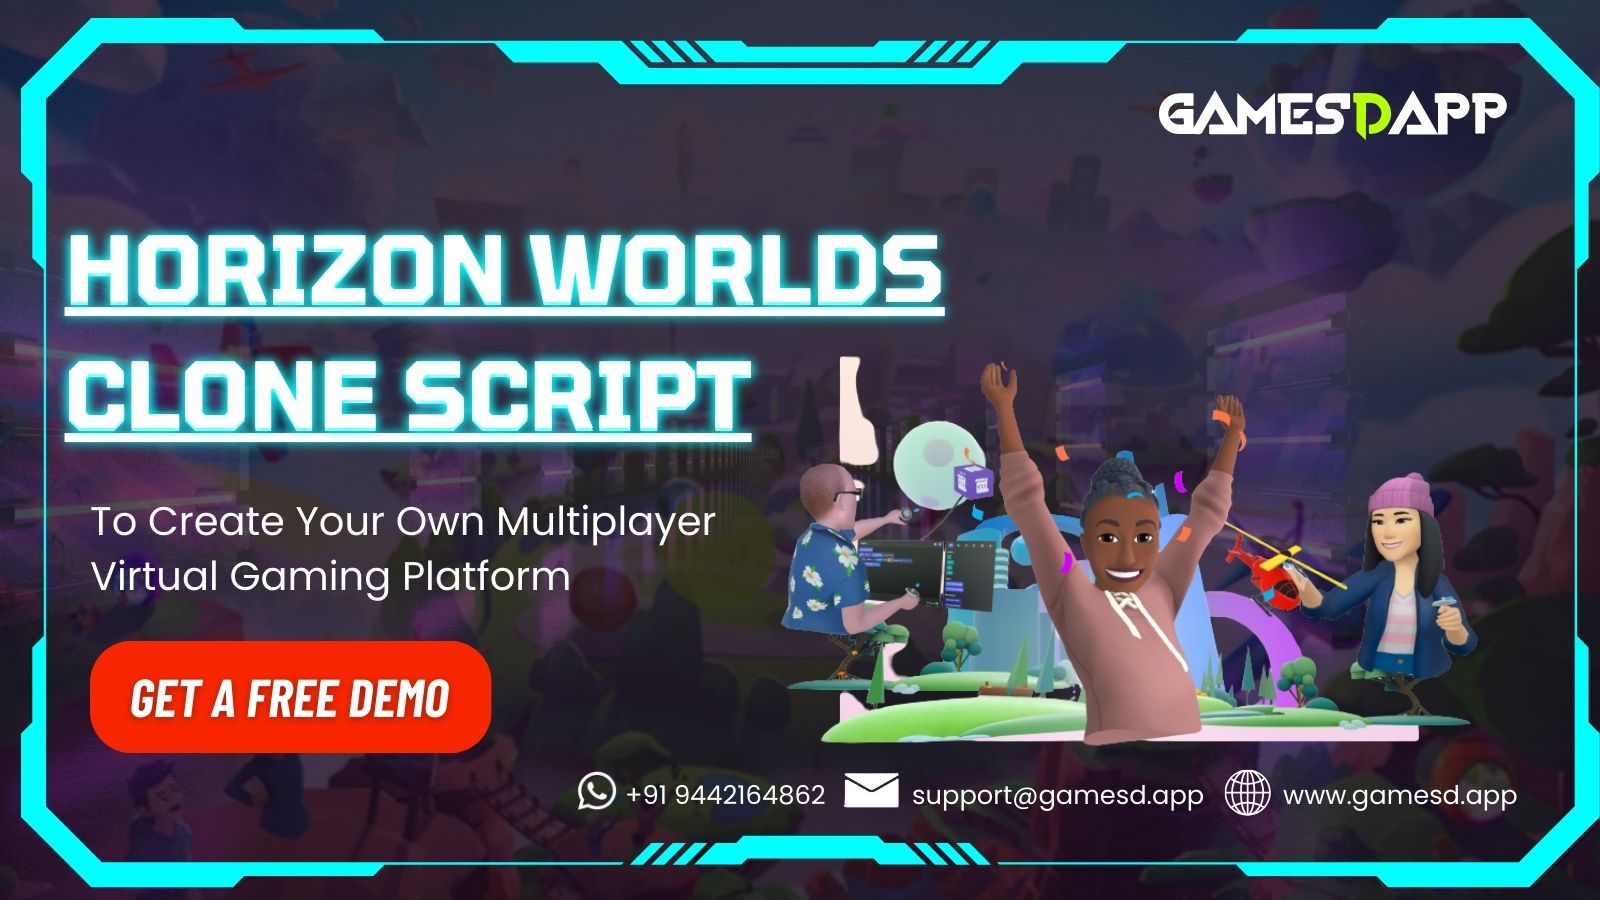 Gamesdapp: Your Trusted Partner in Horizon Worlds Clone Script